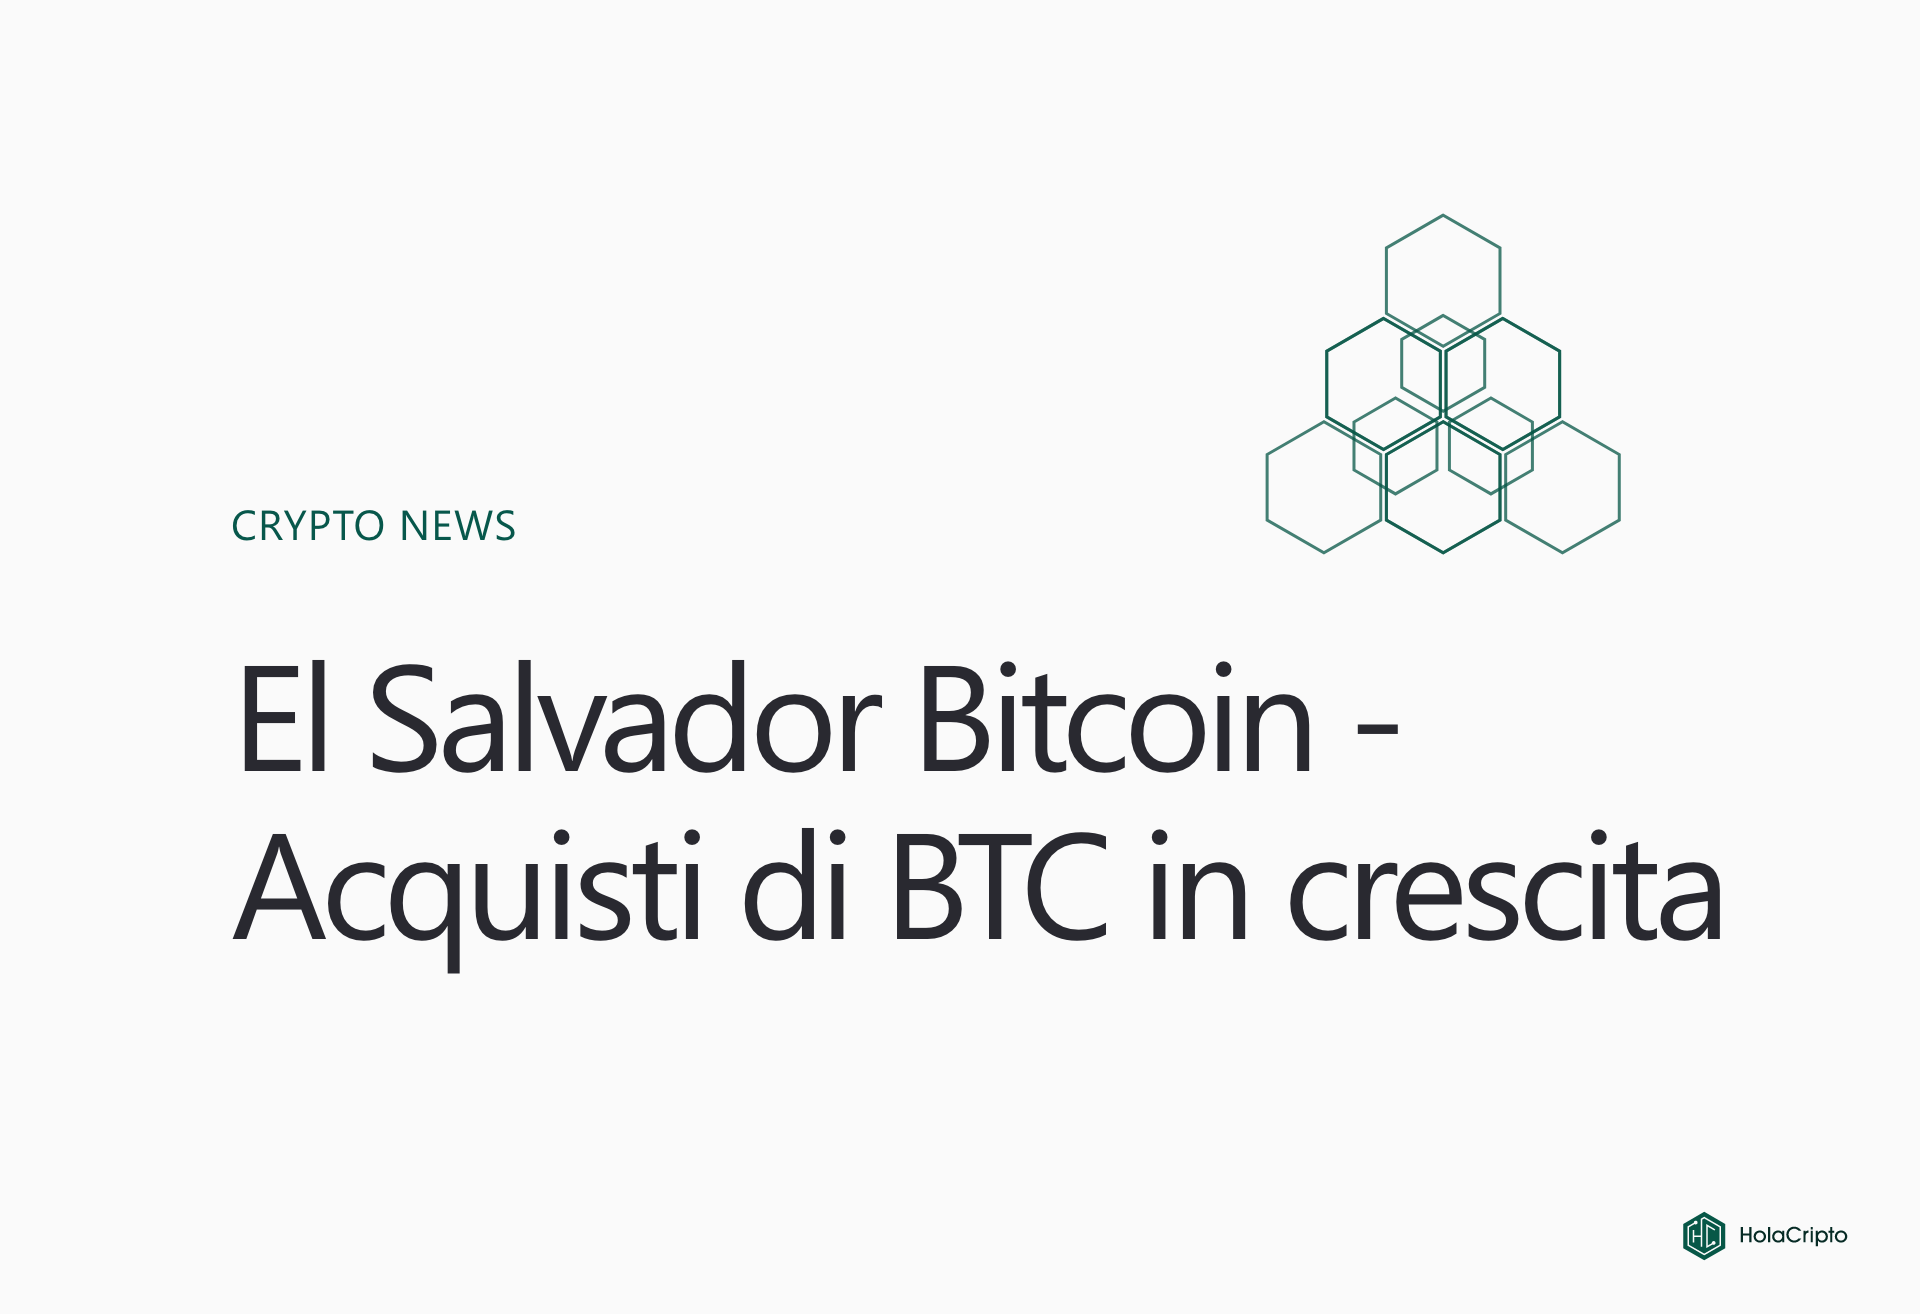 El Salvador continua ad acquisire Bitcoin arrivando a quota 700 BTC